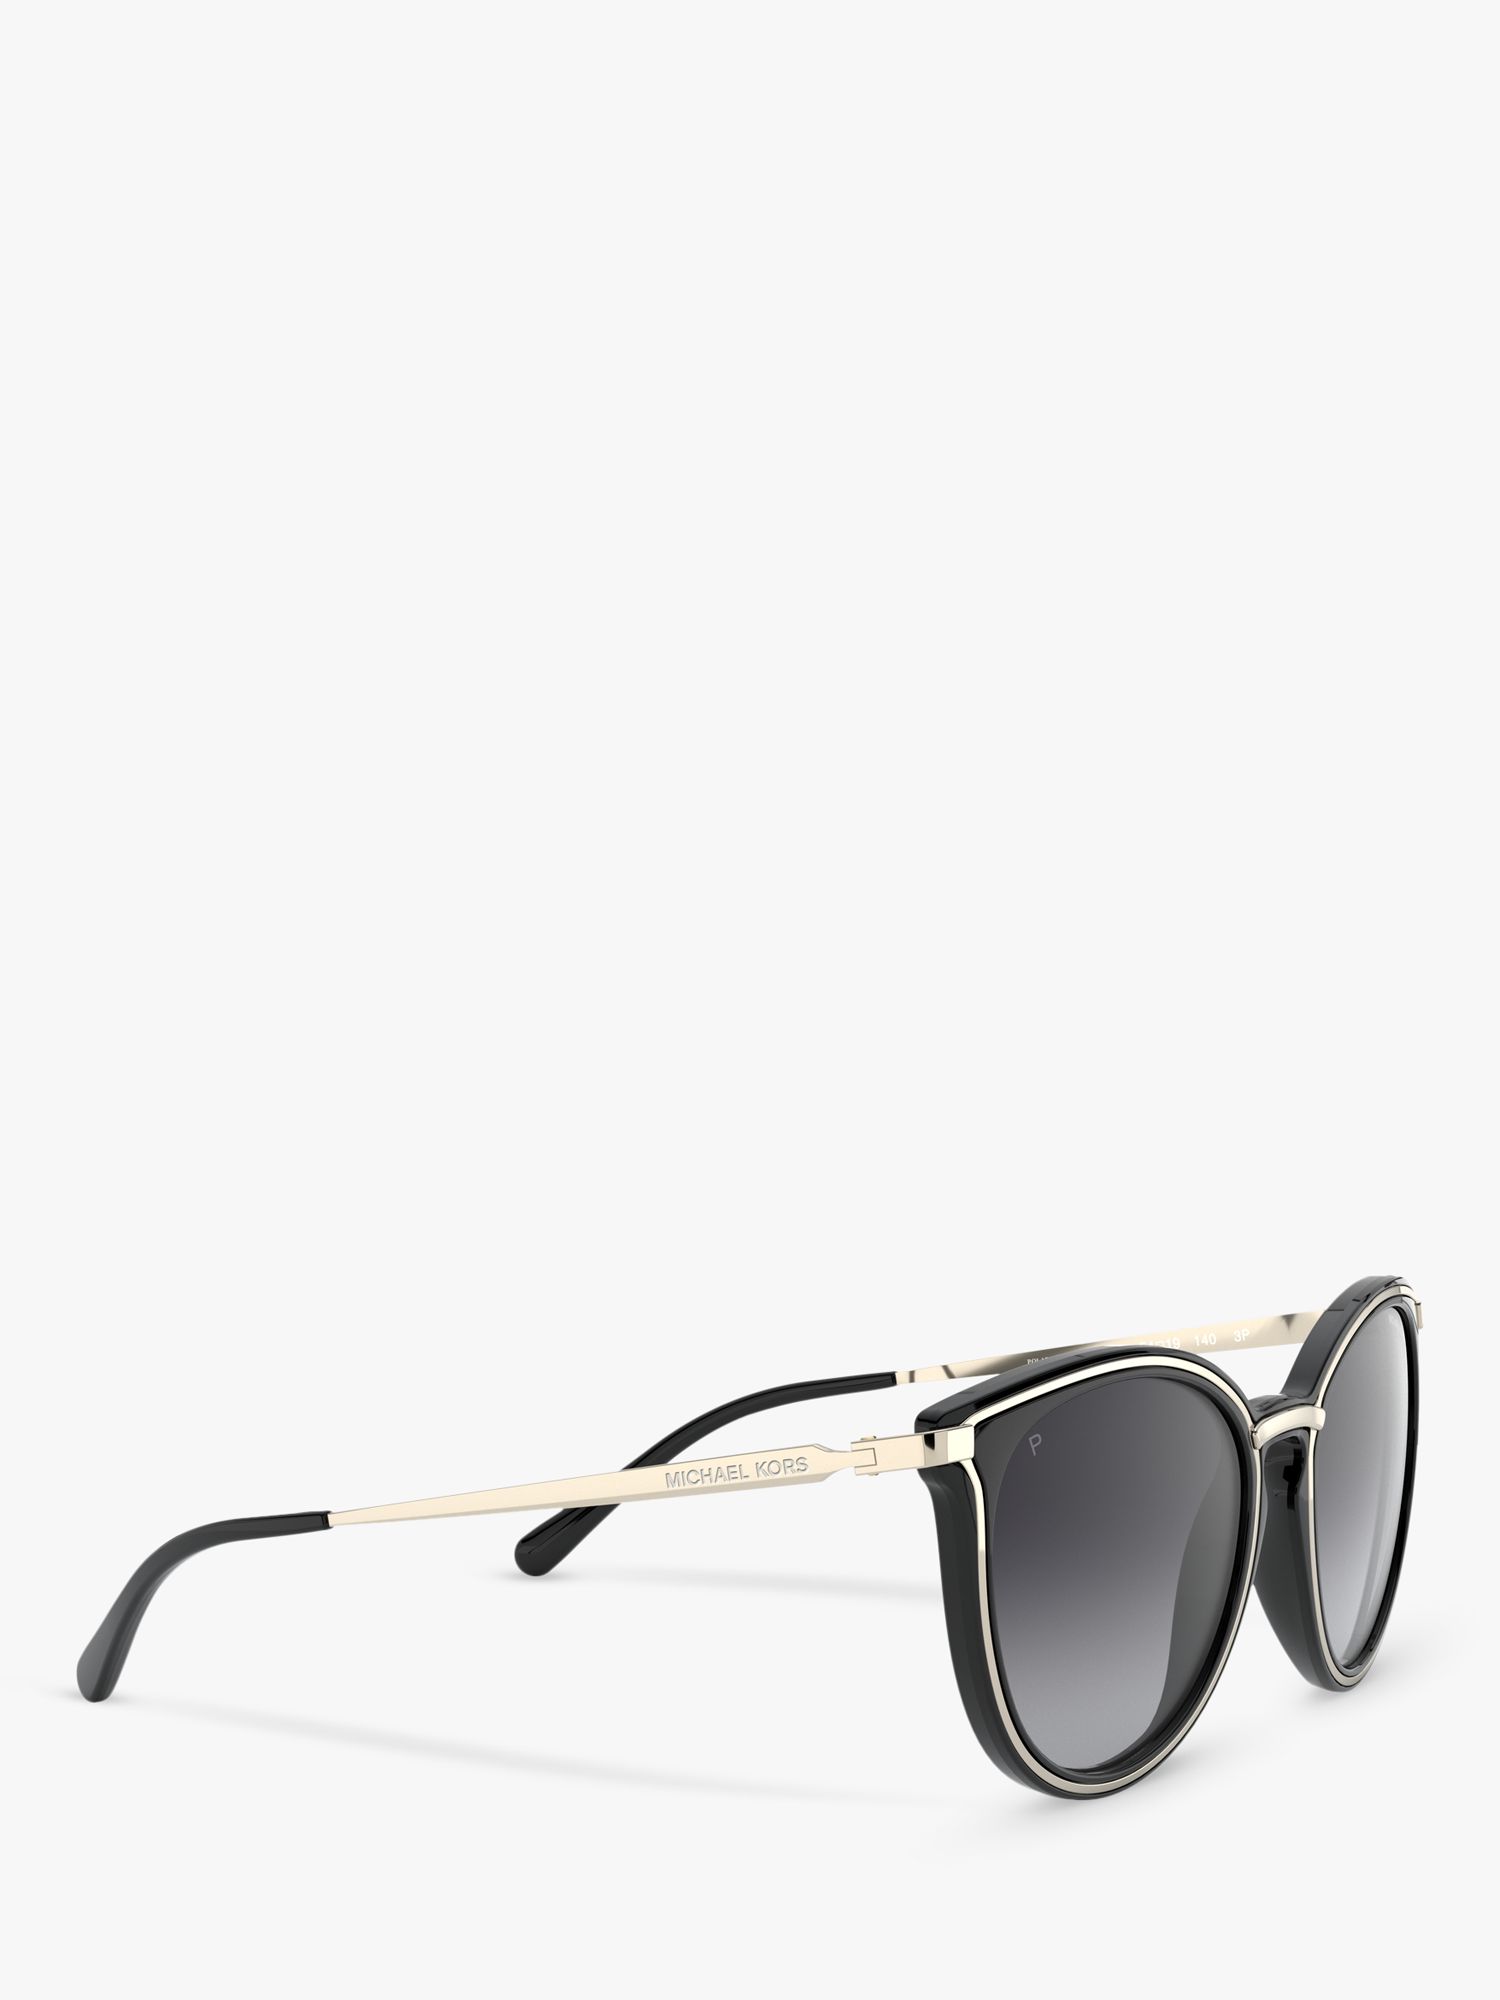 Michael Kors MK1077 Women's Brisbane Polarised Round Sunglasses, Black Gold/ Black Gradient at John Lewis & Partners